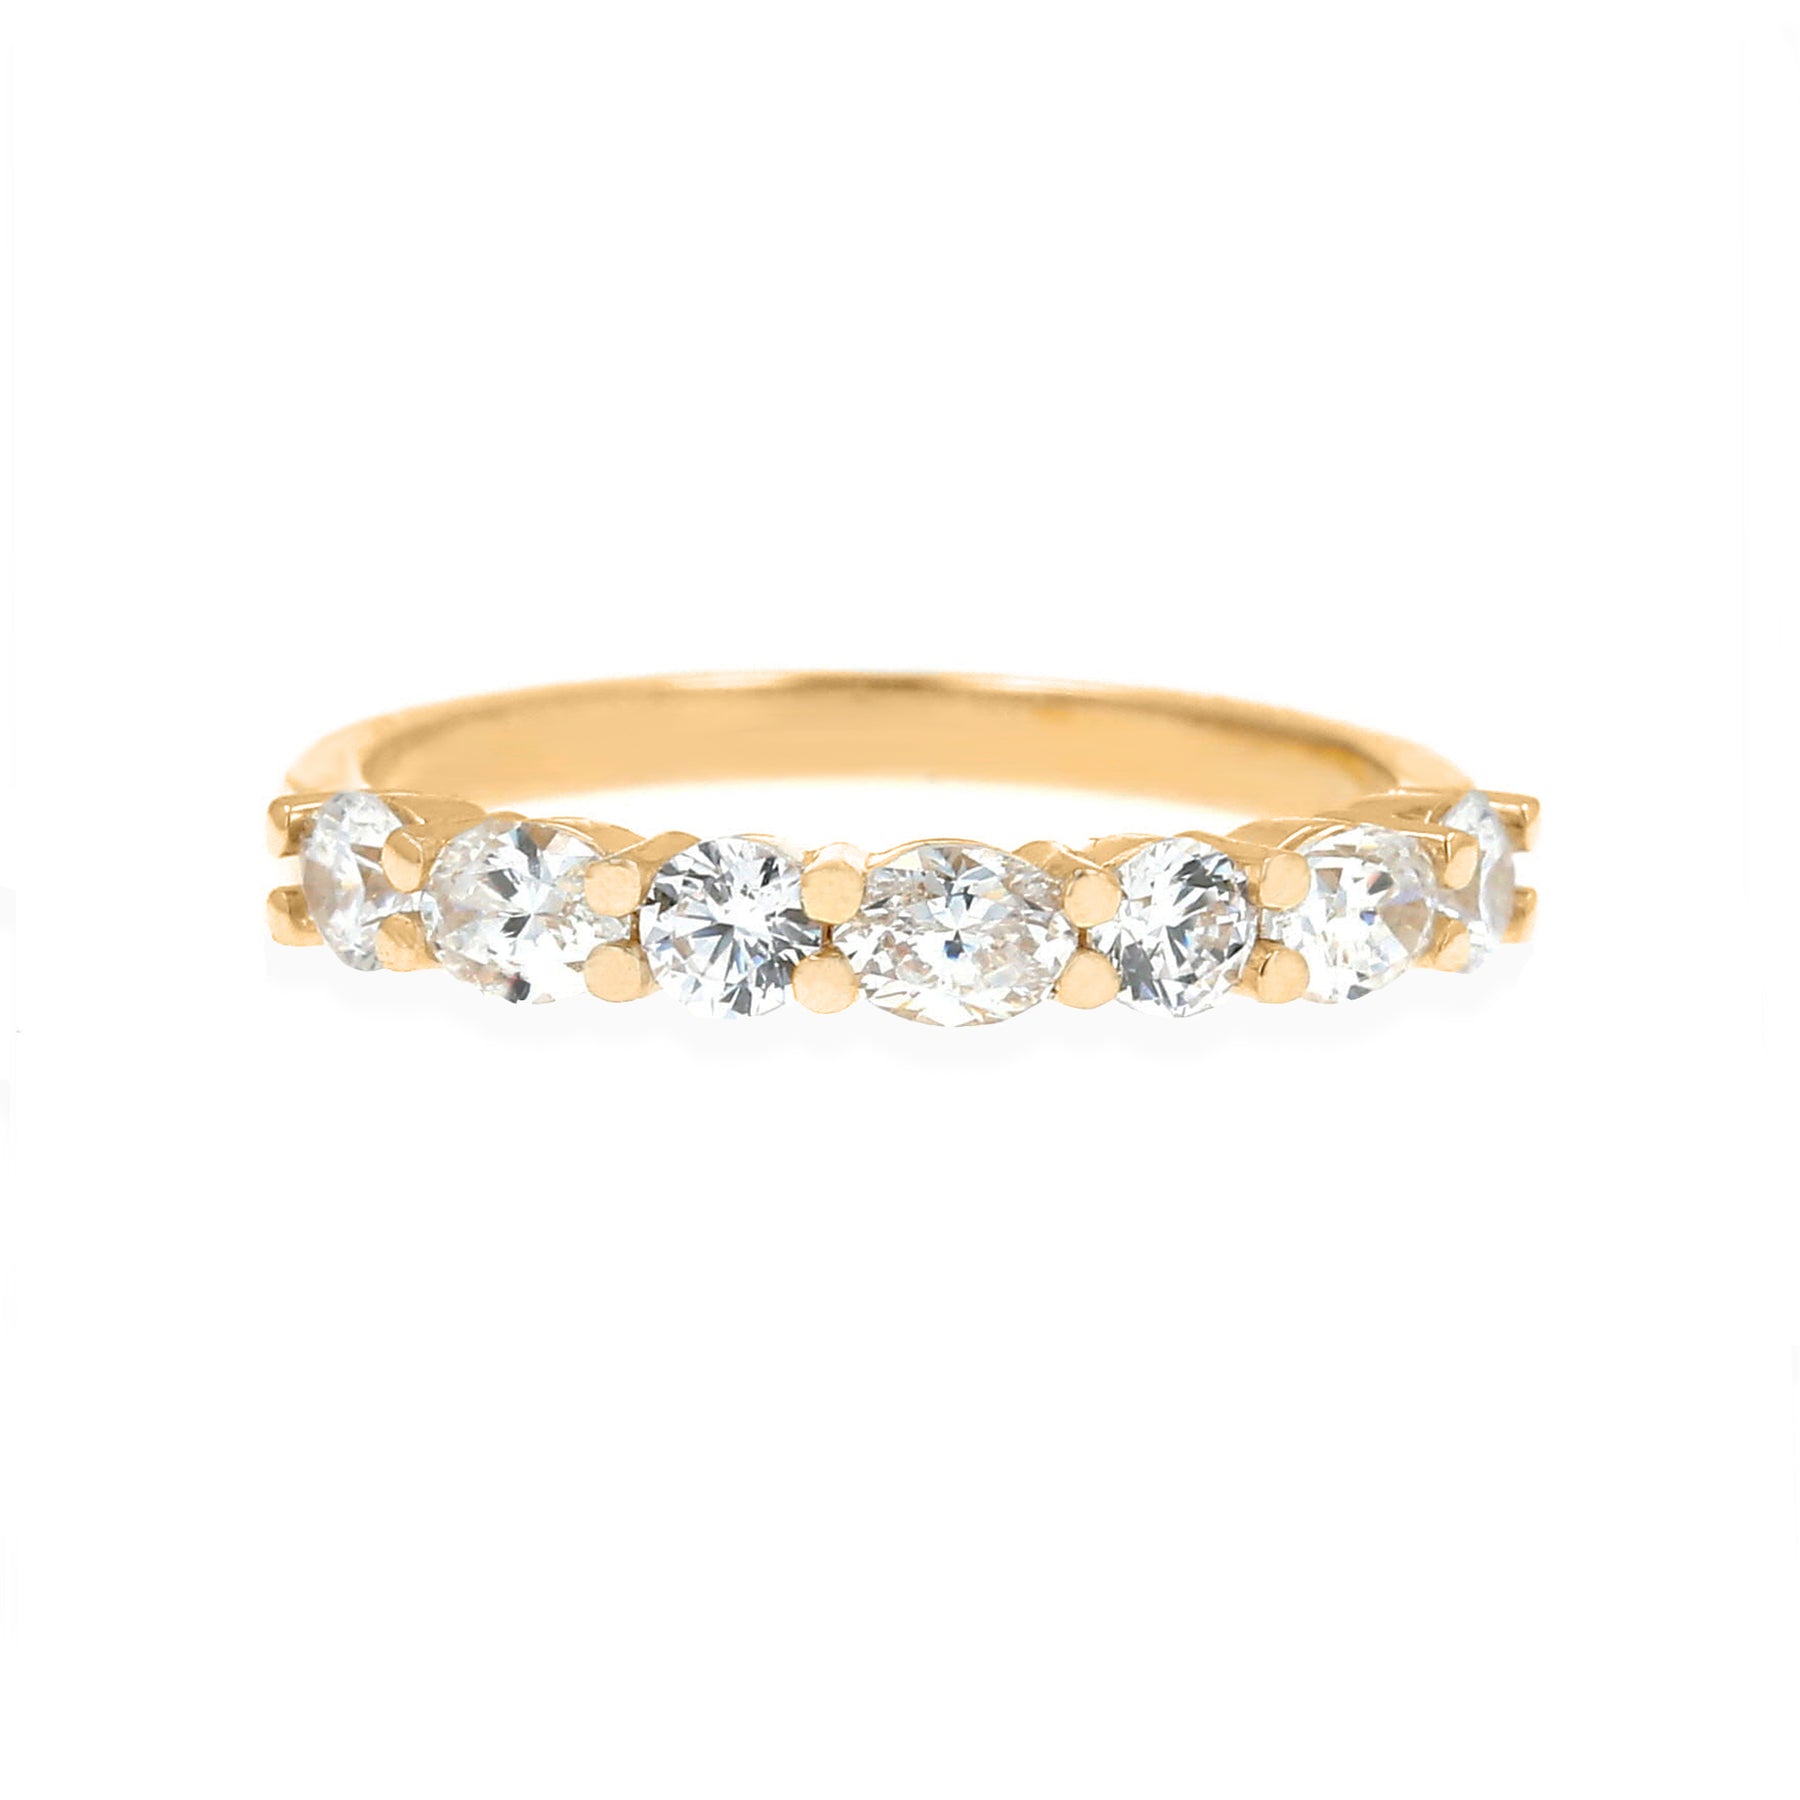 14k gold round brilliant cut diamond oval cut diamond east west alternating diamond wedding ring